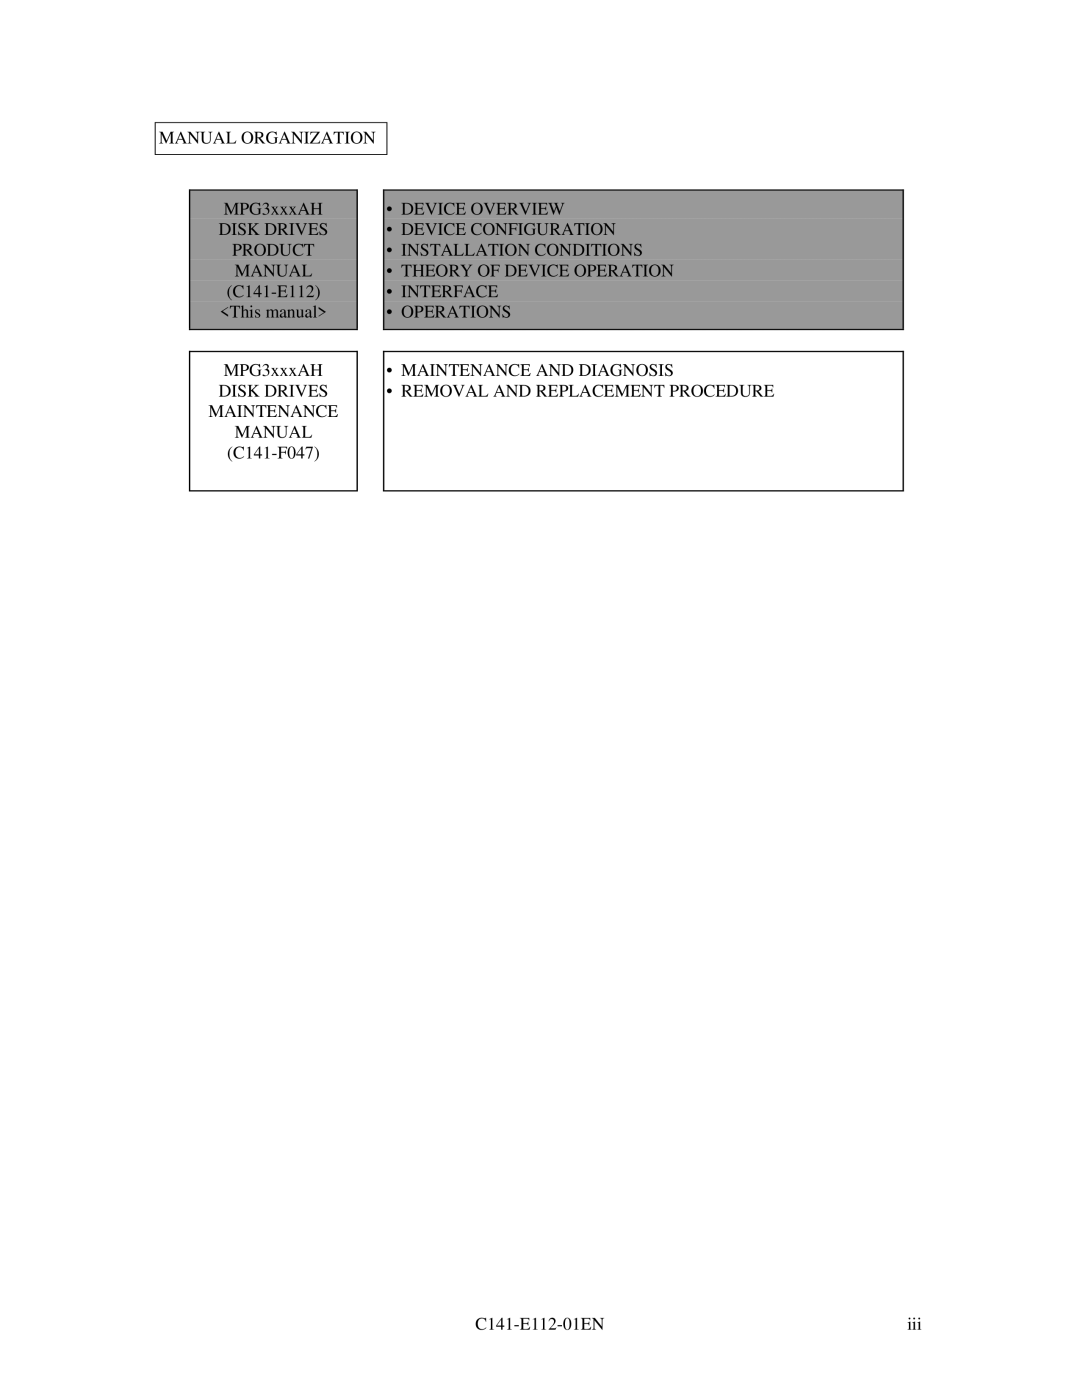 Fujitsu MPG3XXXAH manual MANUAL ORGANIZATION MPG3xxxAH DISK DRIVES PRODUCT MANUAL C141-E112, C141-E112-01EN 